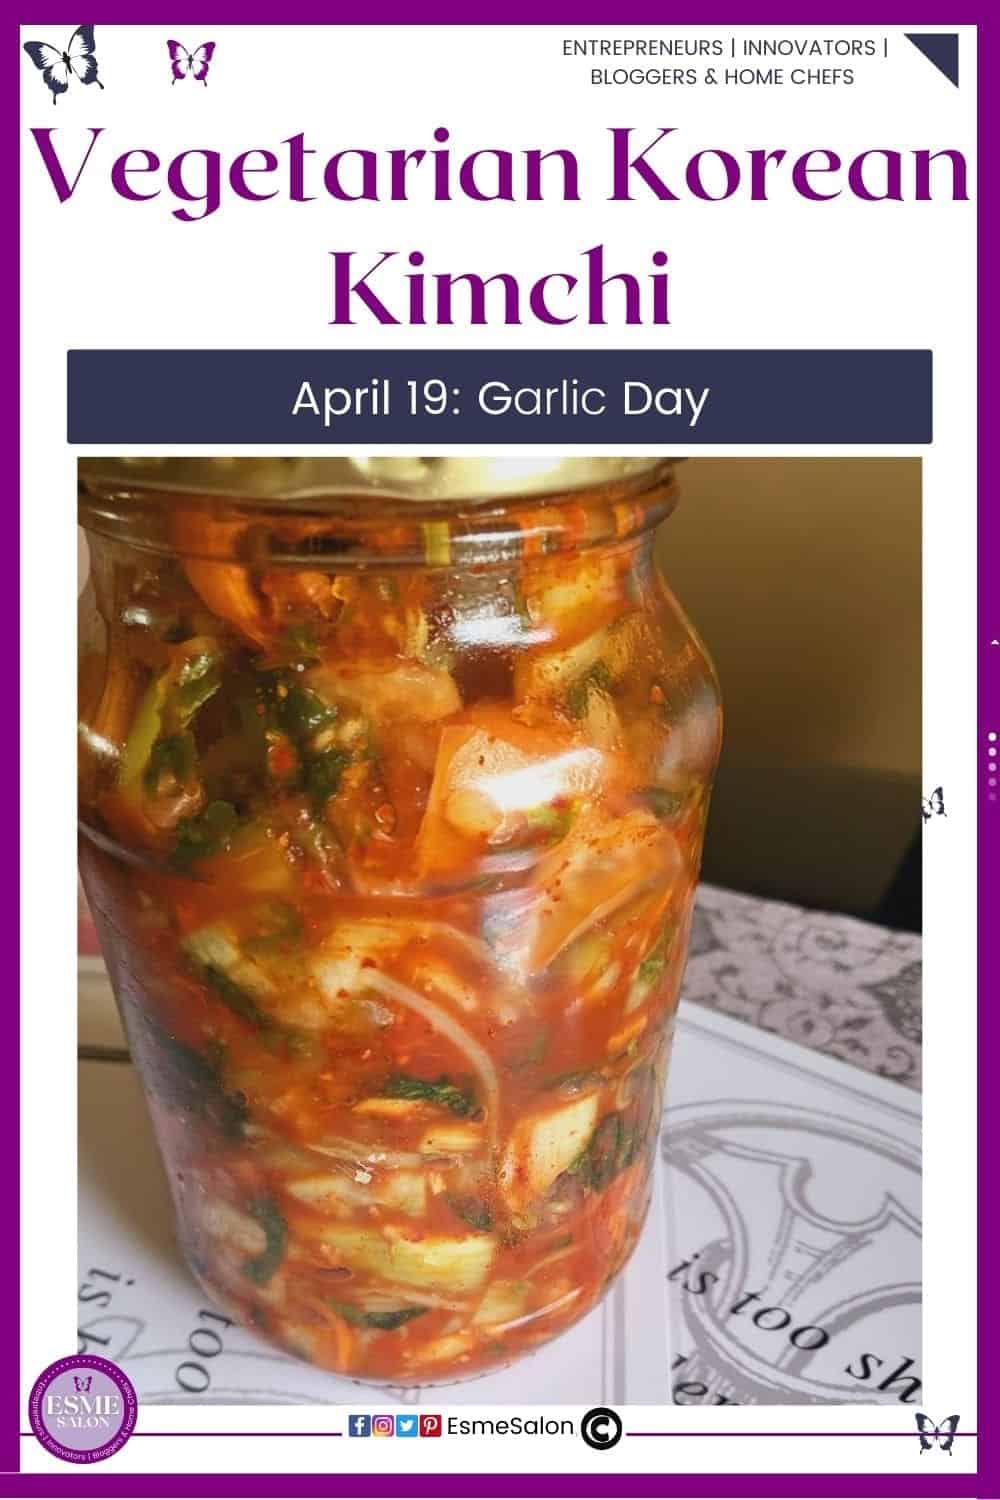 An image of a bottled of homemade Vegetarian Korean Kimchi